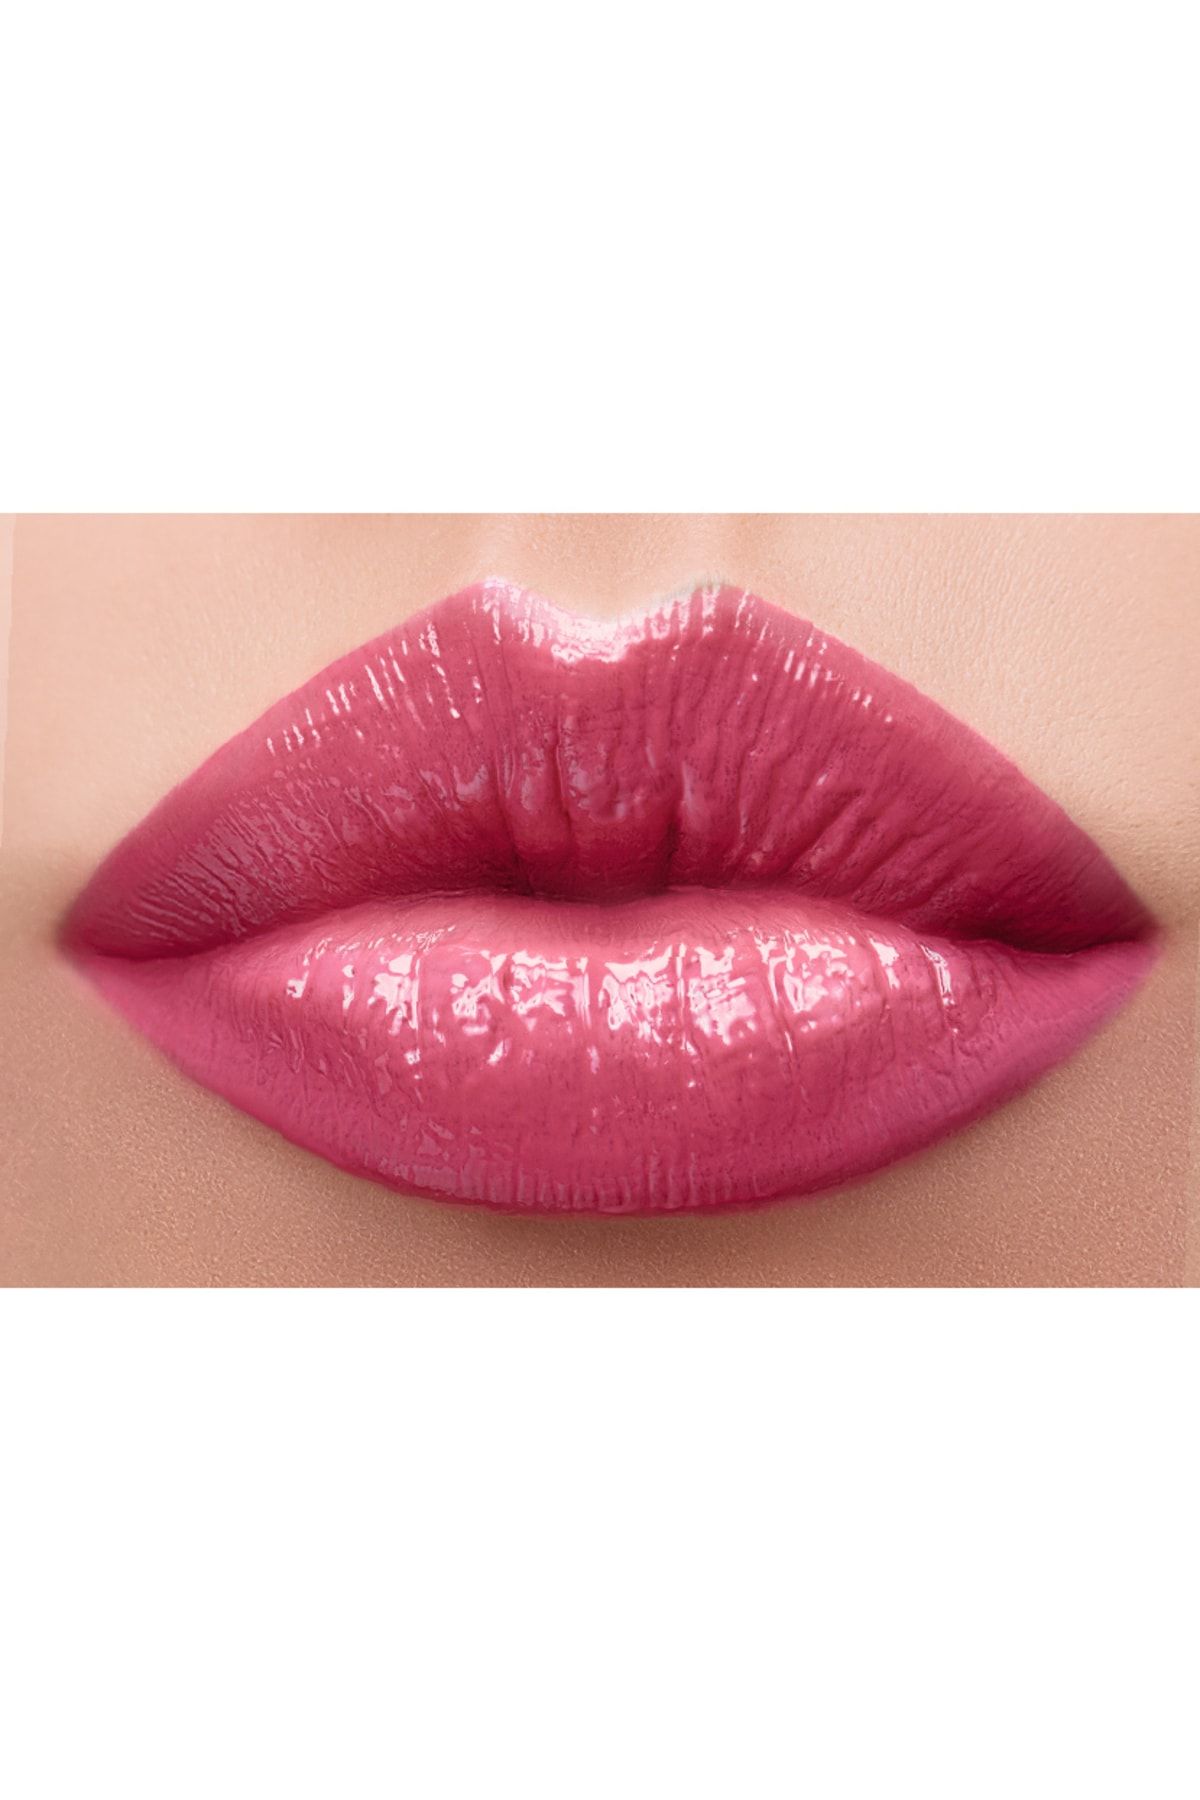 Faberlic Glam Team Satin Kiss Lipstick "pembe Çiçek" - 3.8 Gr.